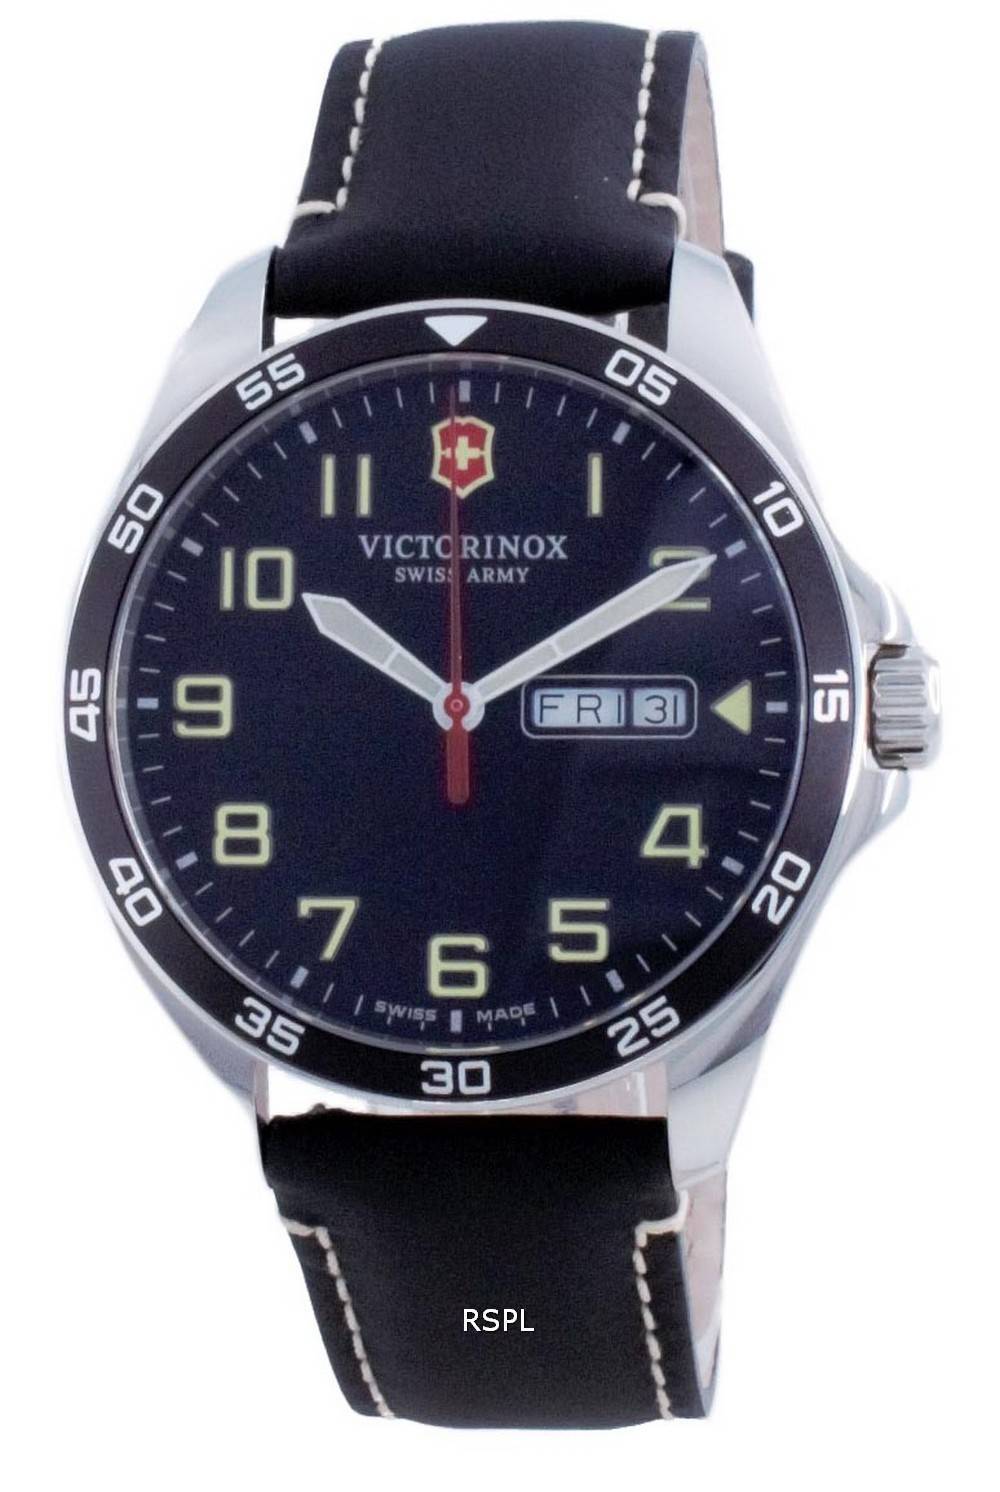 Victorinox Fieldforce Leather 검은 색 다이얼 쿼츠 241846100M 남성용 시계